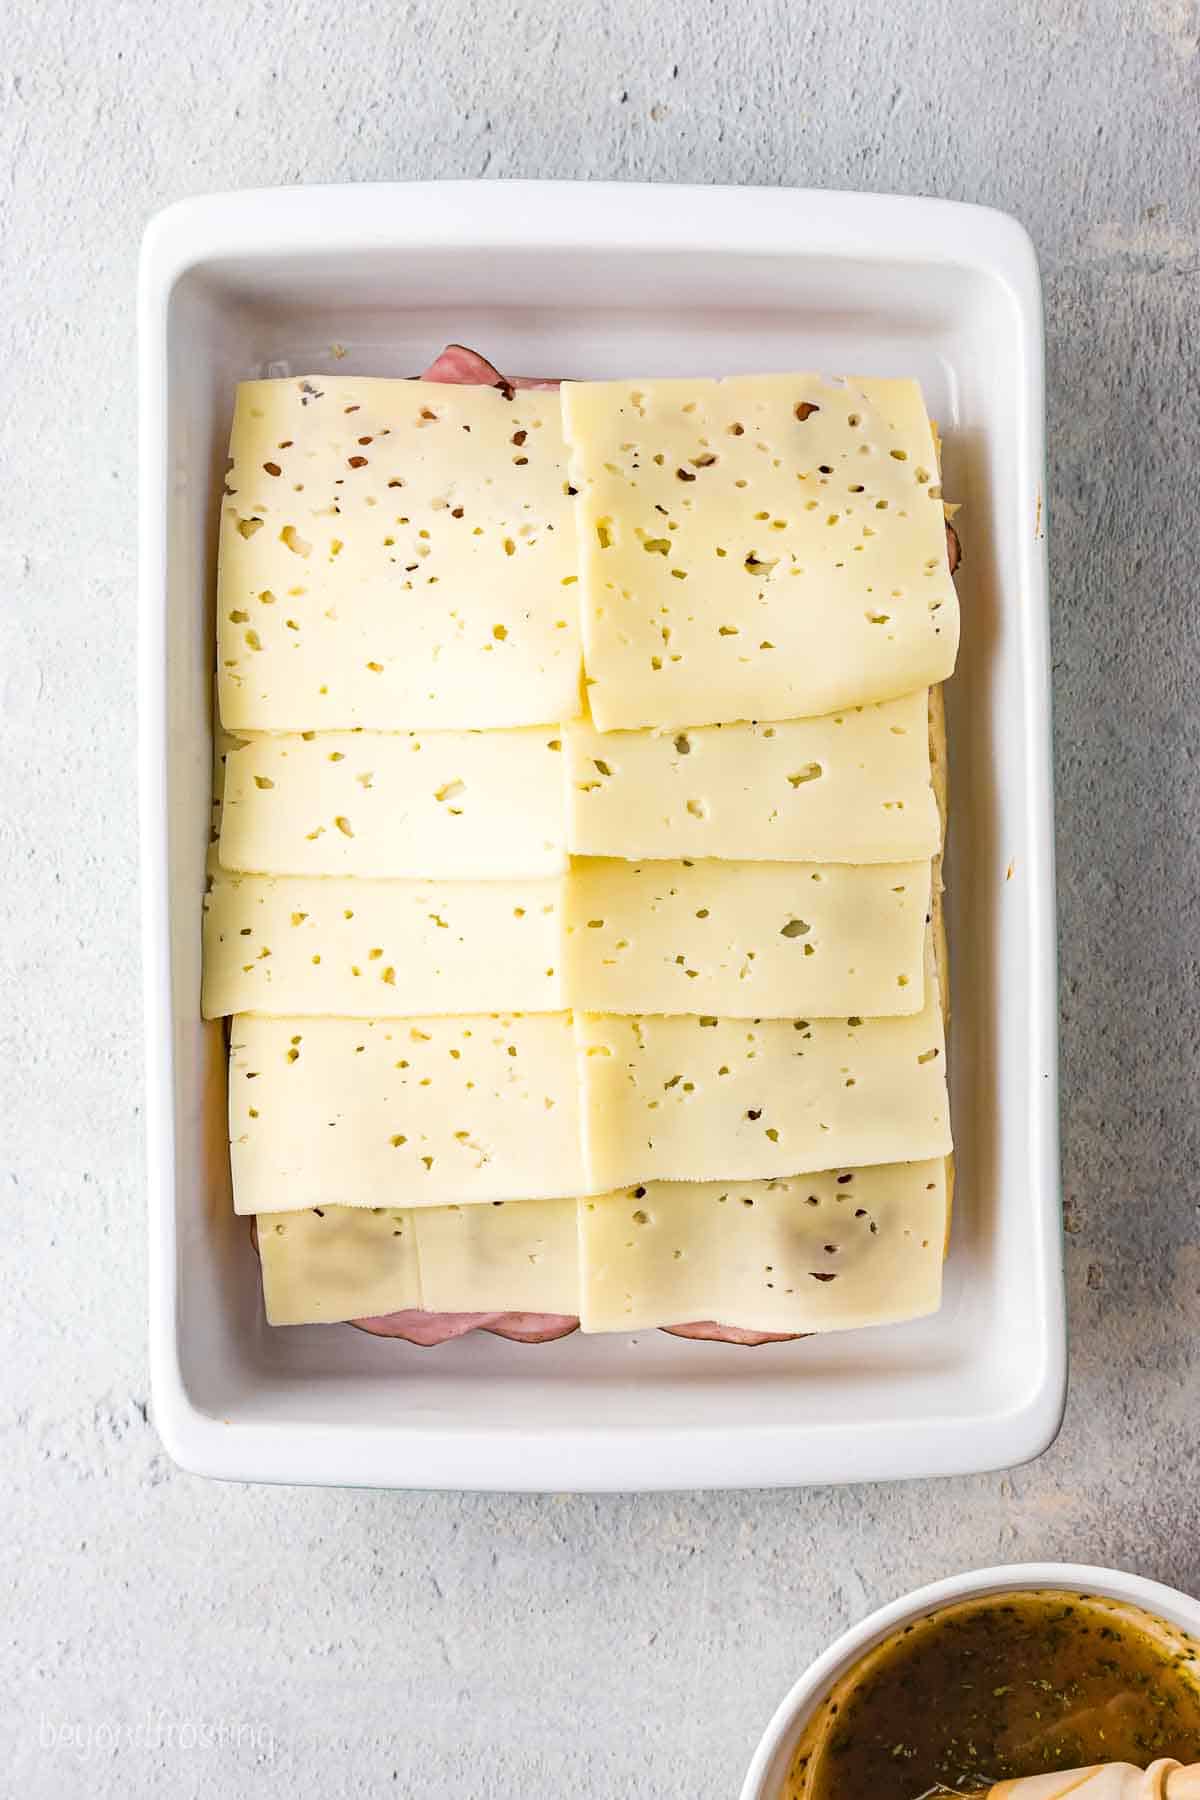 Cheese layered on top of the ham, pineapple, and Hawaiian rolls.